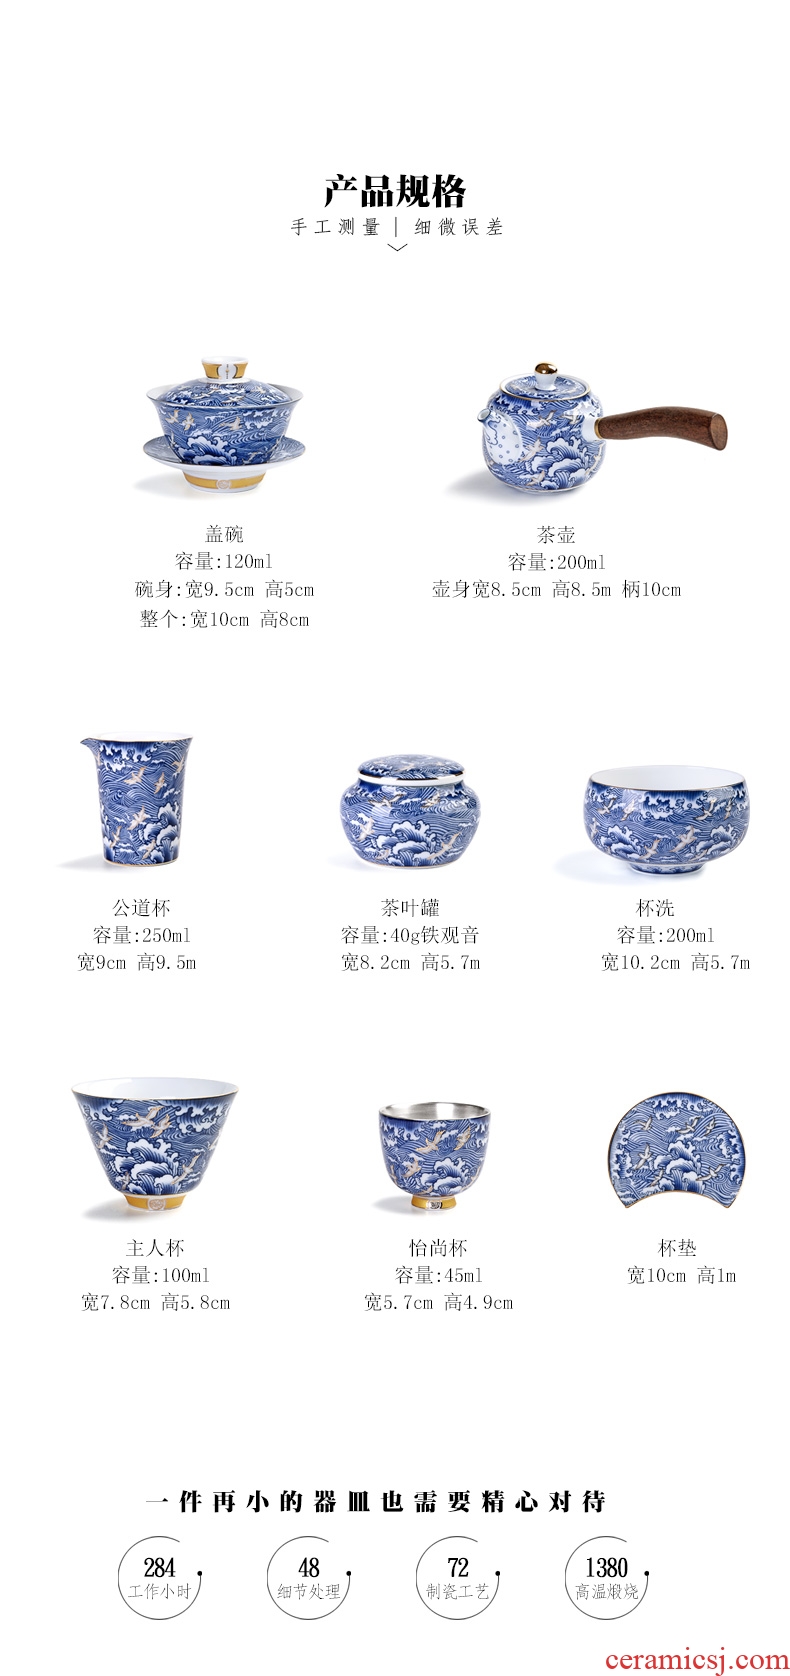 Mare undarum ran xiang tea tea sets ceramic kung fu tea set the teapot teacup tureen of a complete set of jingdezhen blue and white porcelain